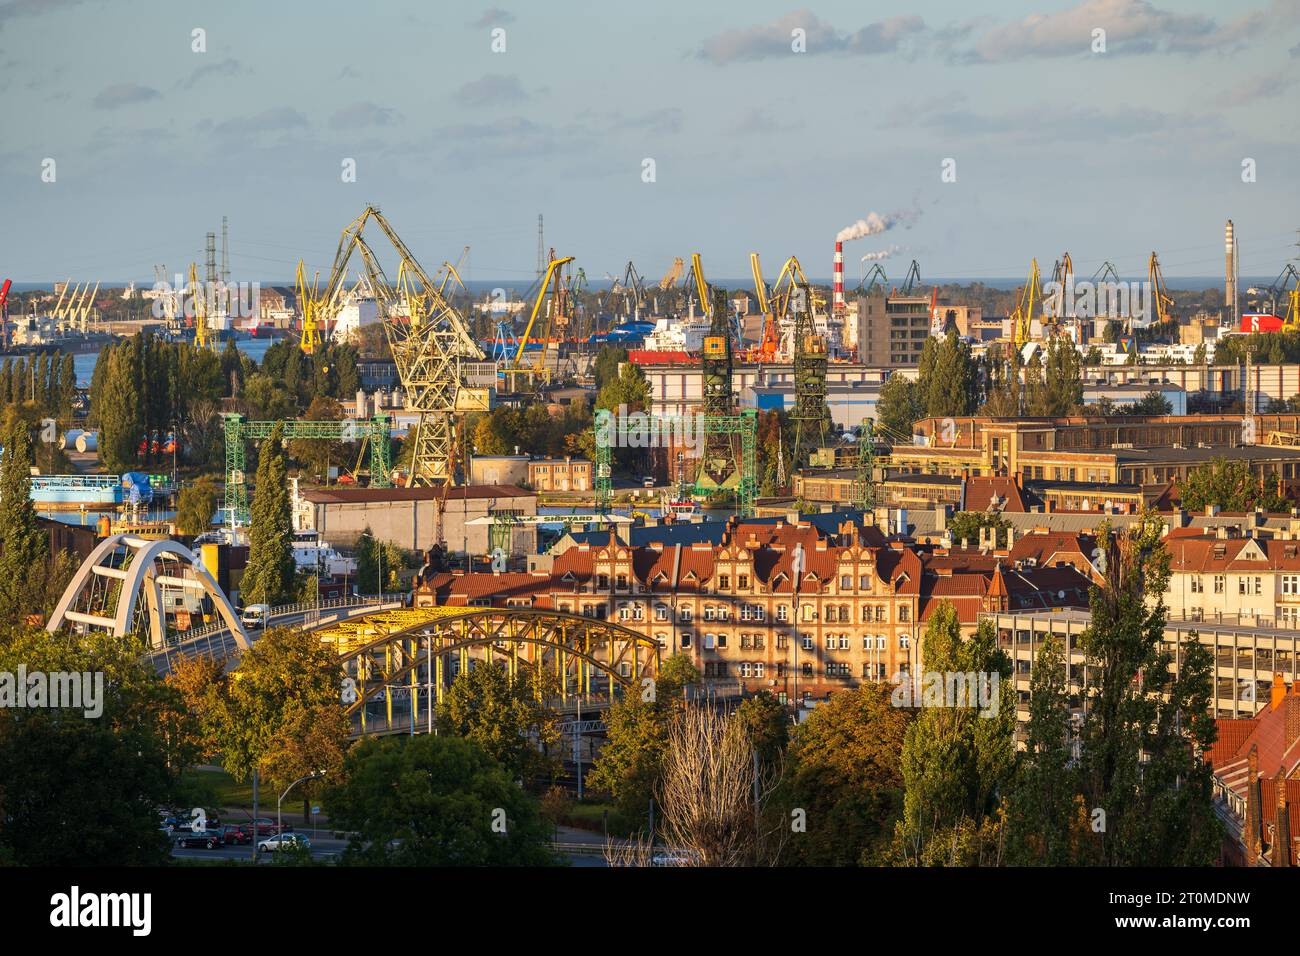 Danzig Industriestadt in Polen, Danziger Werft mit berühmten historischen Hafenkränen bei Sonnenuntergang. Stockfoto